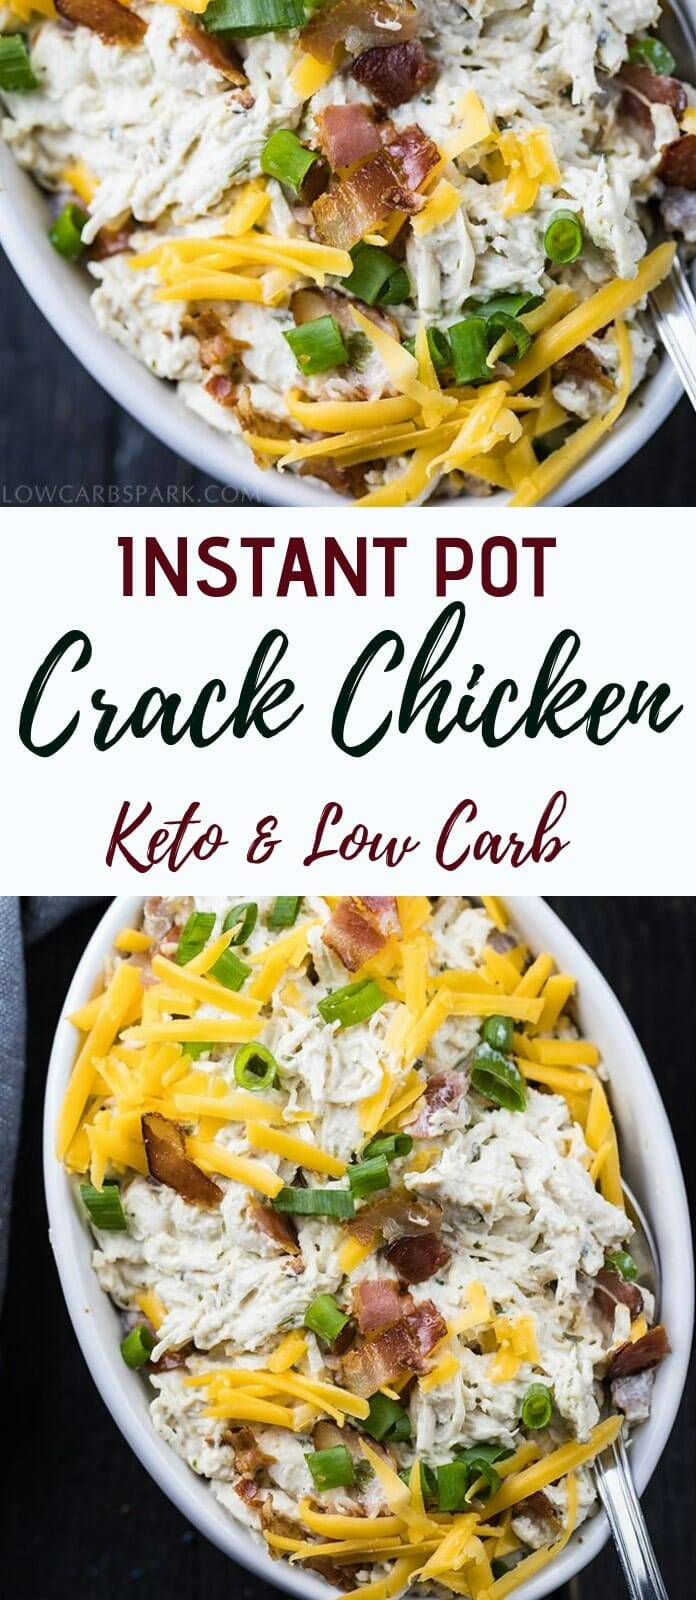 Slow Cooker Keto Crack Chicken
 Easy Crack Chicken Recipe Instant Pot or Slow Cooker